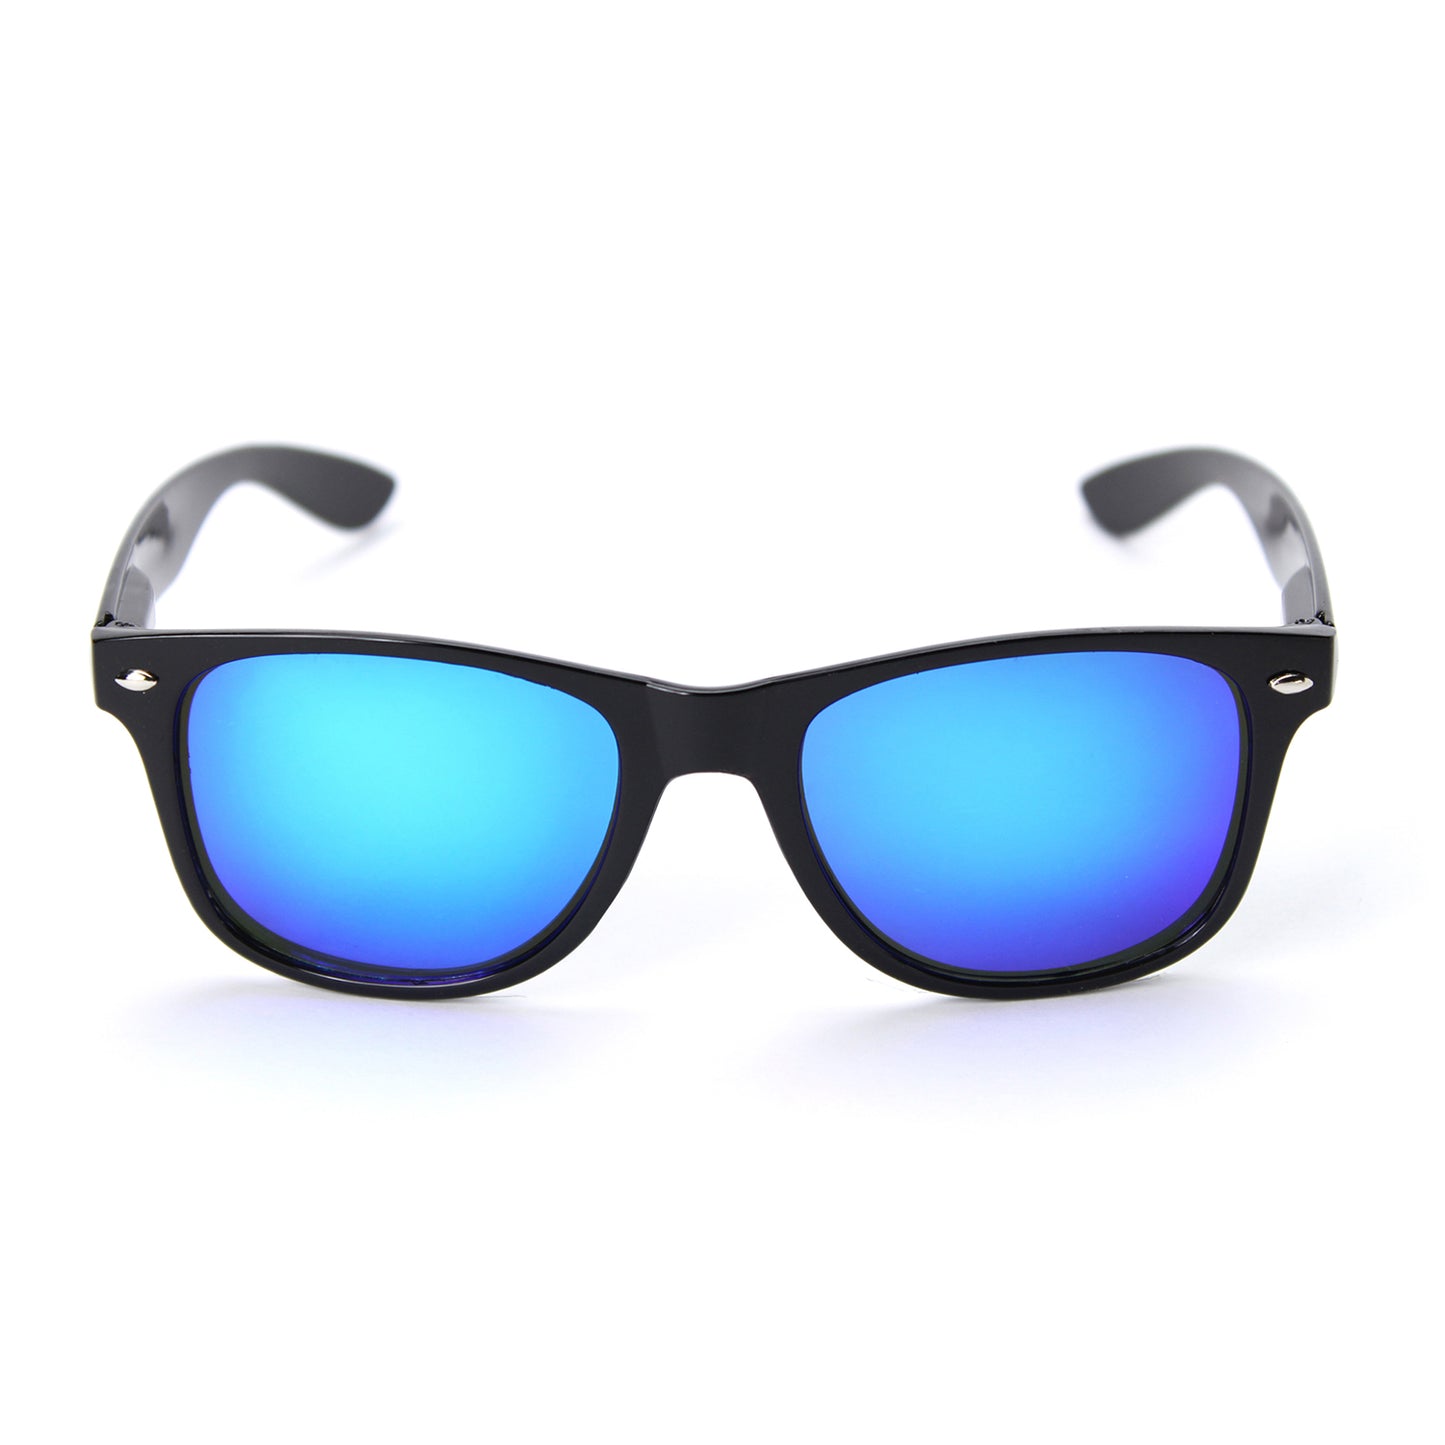 UNC Tar Heels Sunglasses in Black